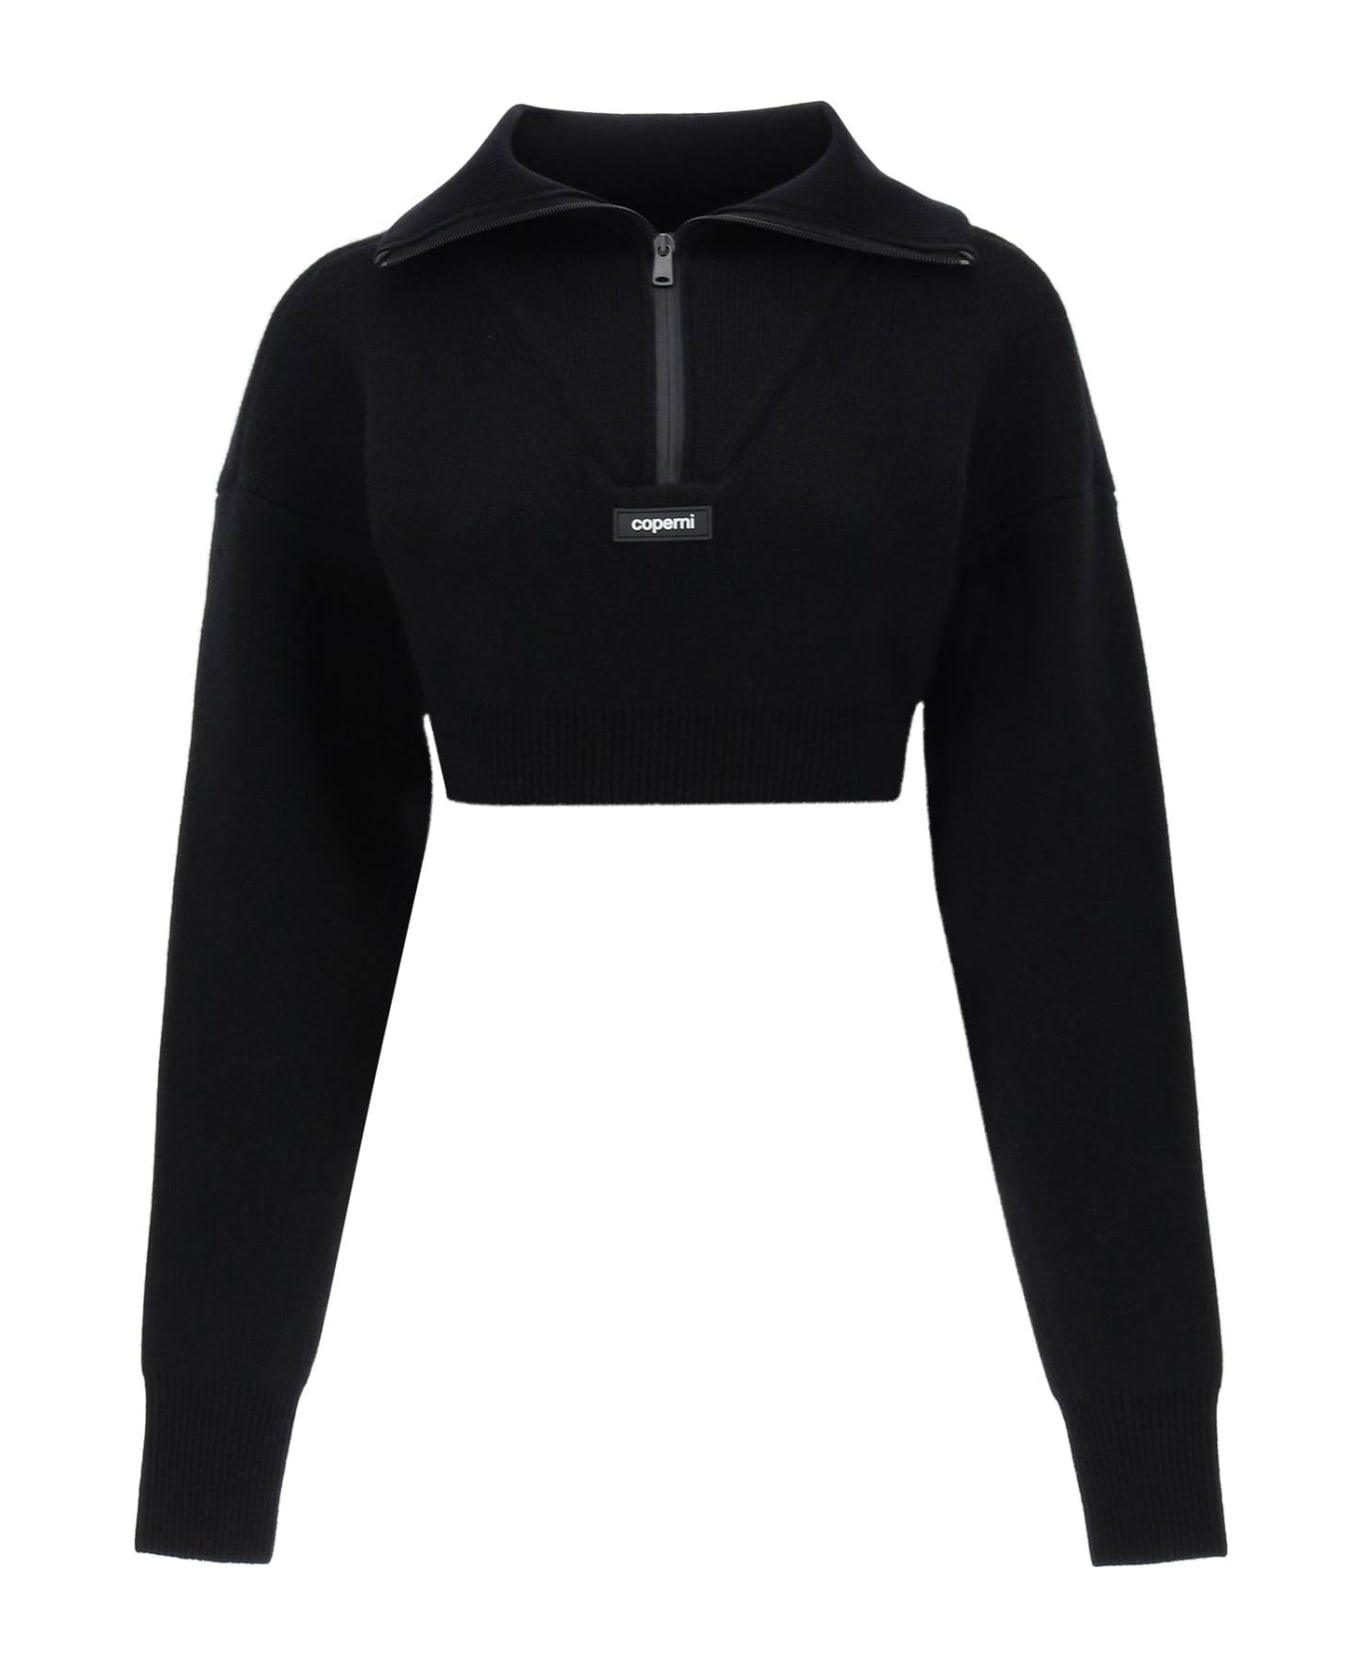 Coperni Half Zip Cropped Boxy Wool Sweater - Black ニットウェア